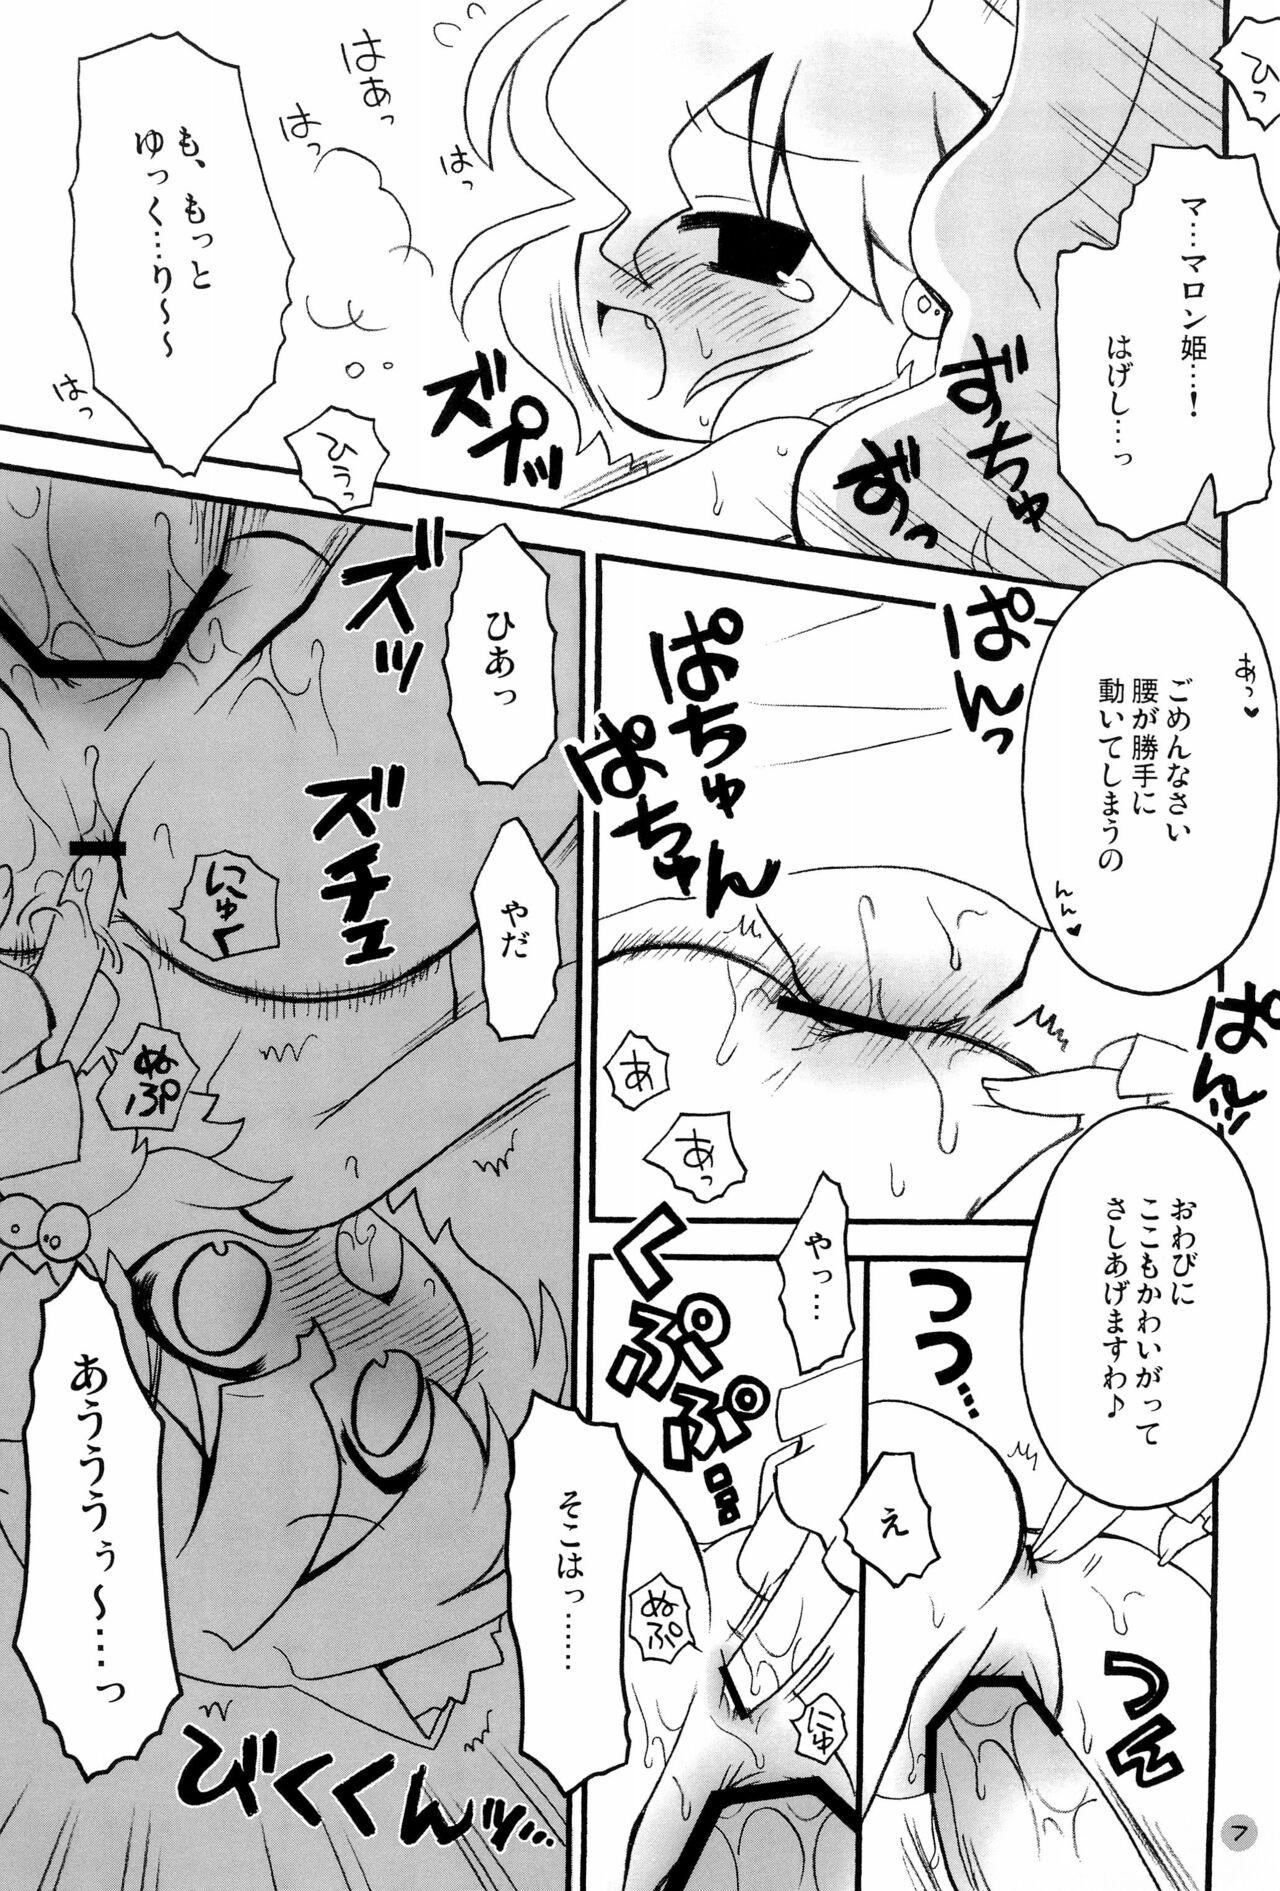 Caliente Harumomo no Tsubomi - 7th dragon Spank - Page 7